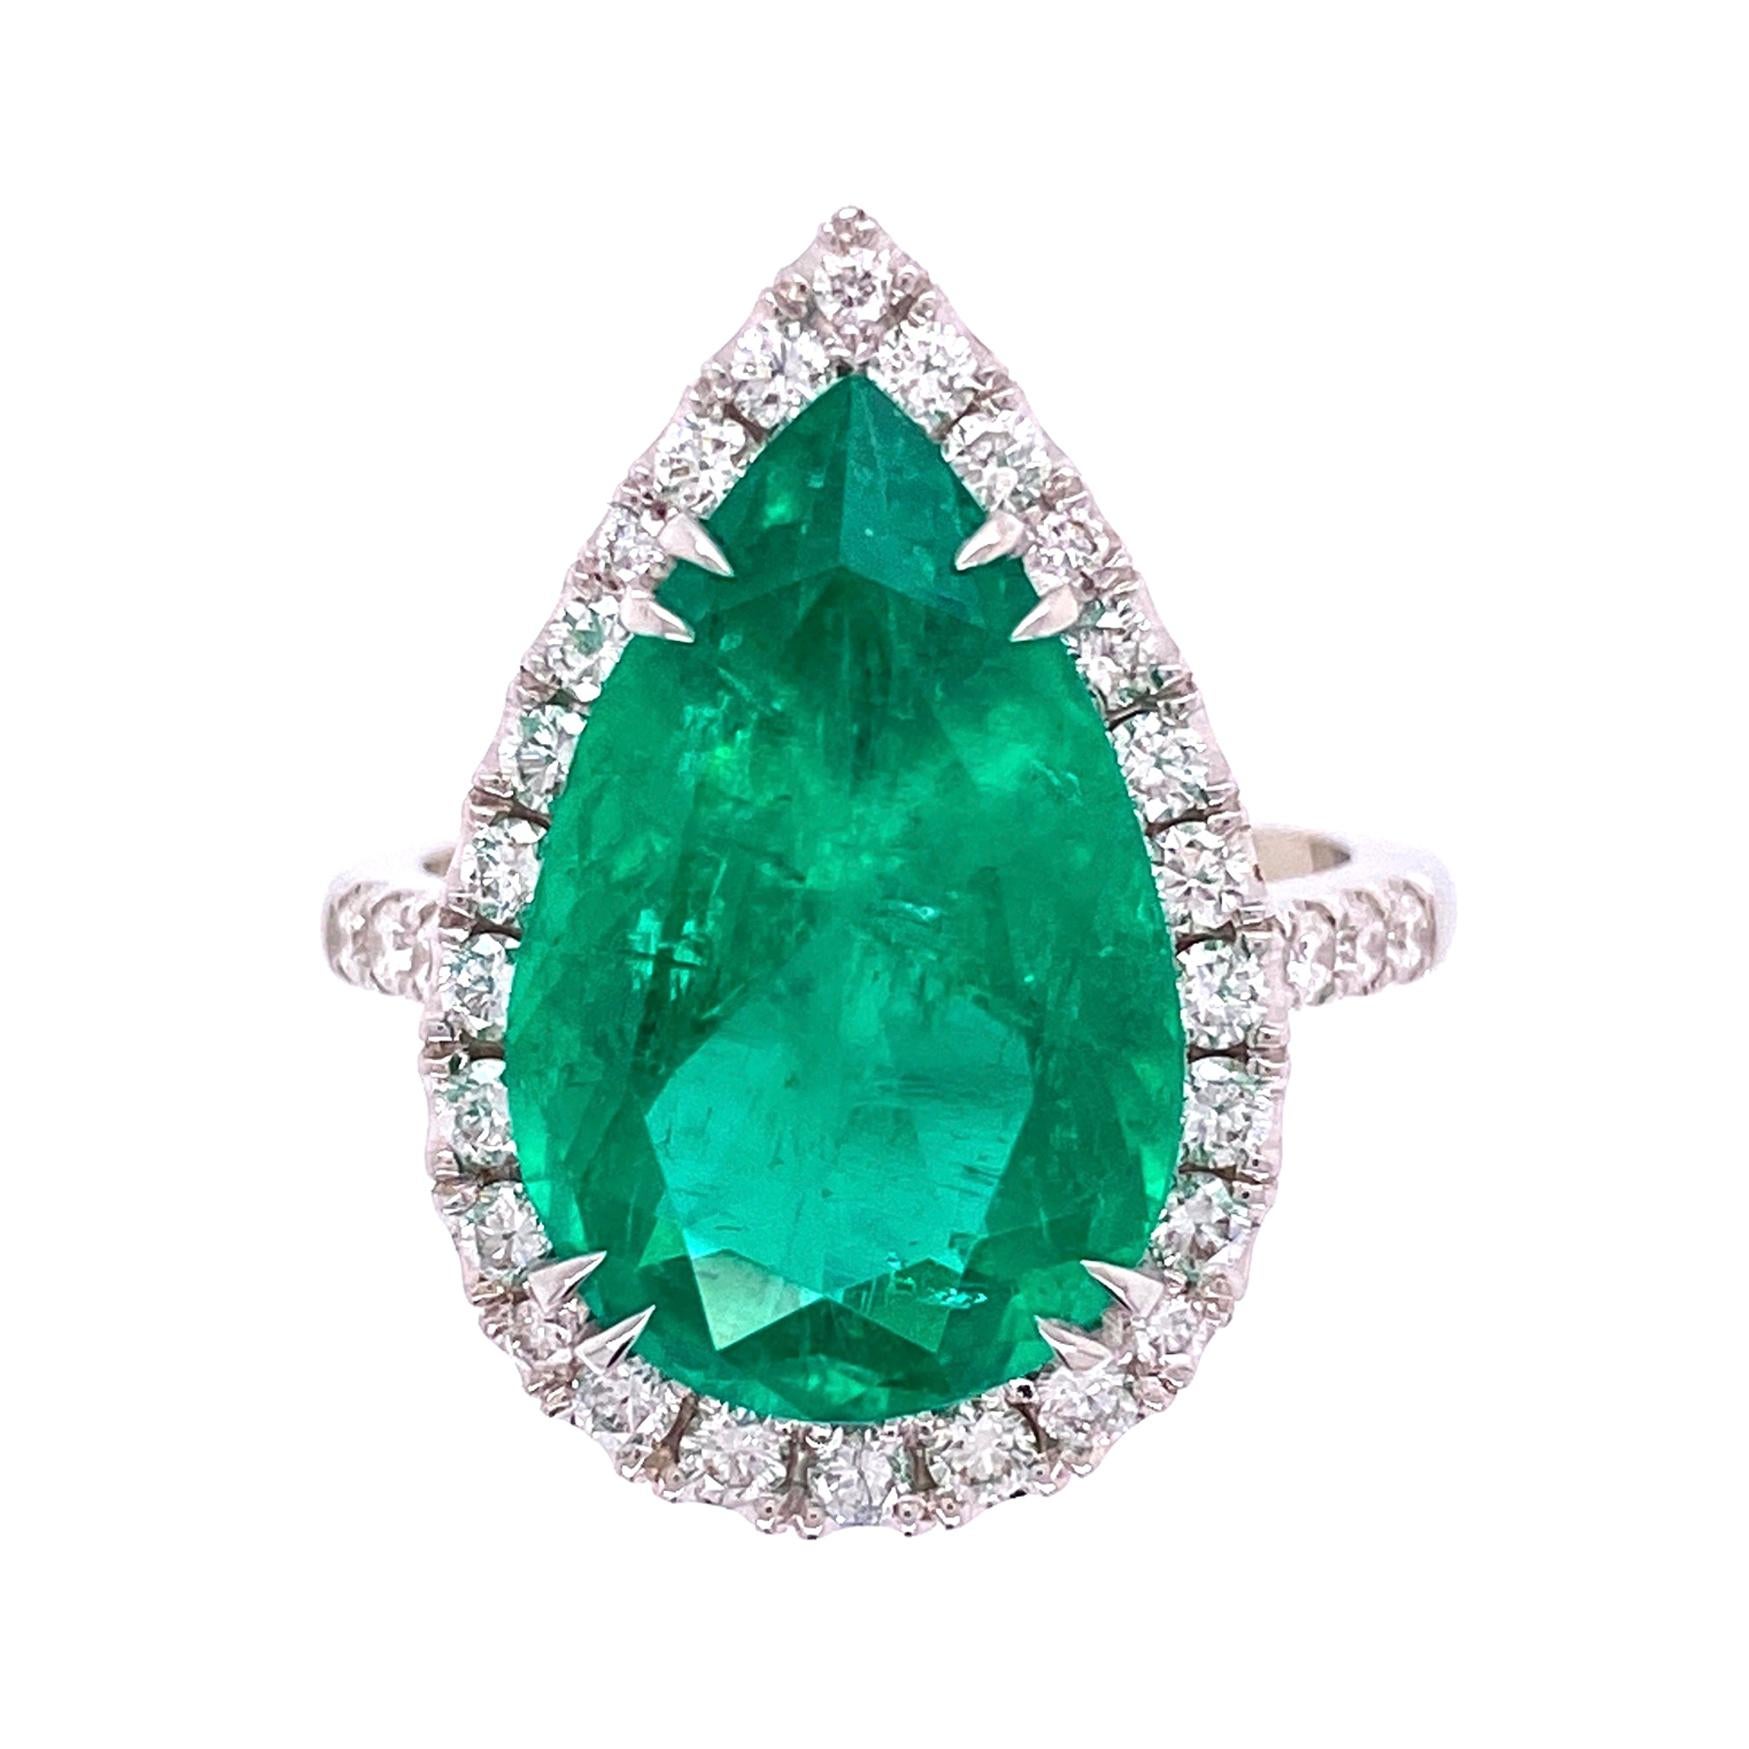 6.96 Carat Pear Shaped Emerald and Diamond Ring Estate Fine Jewelry